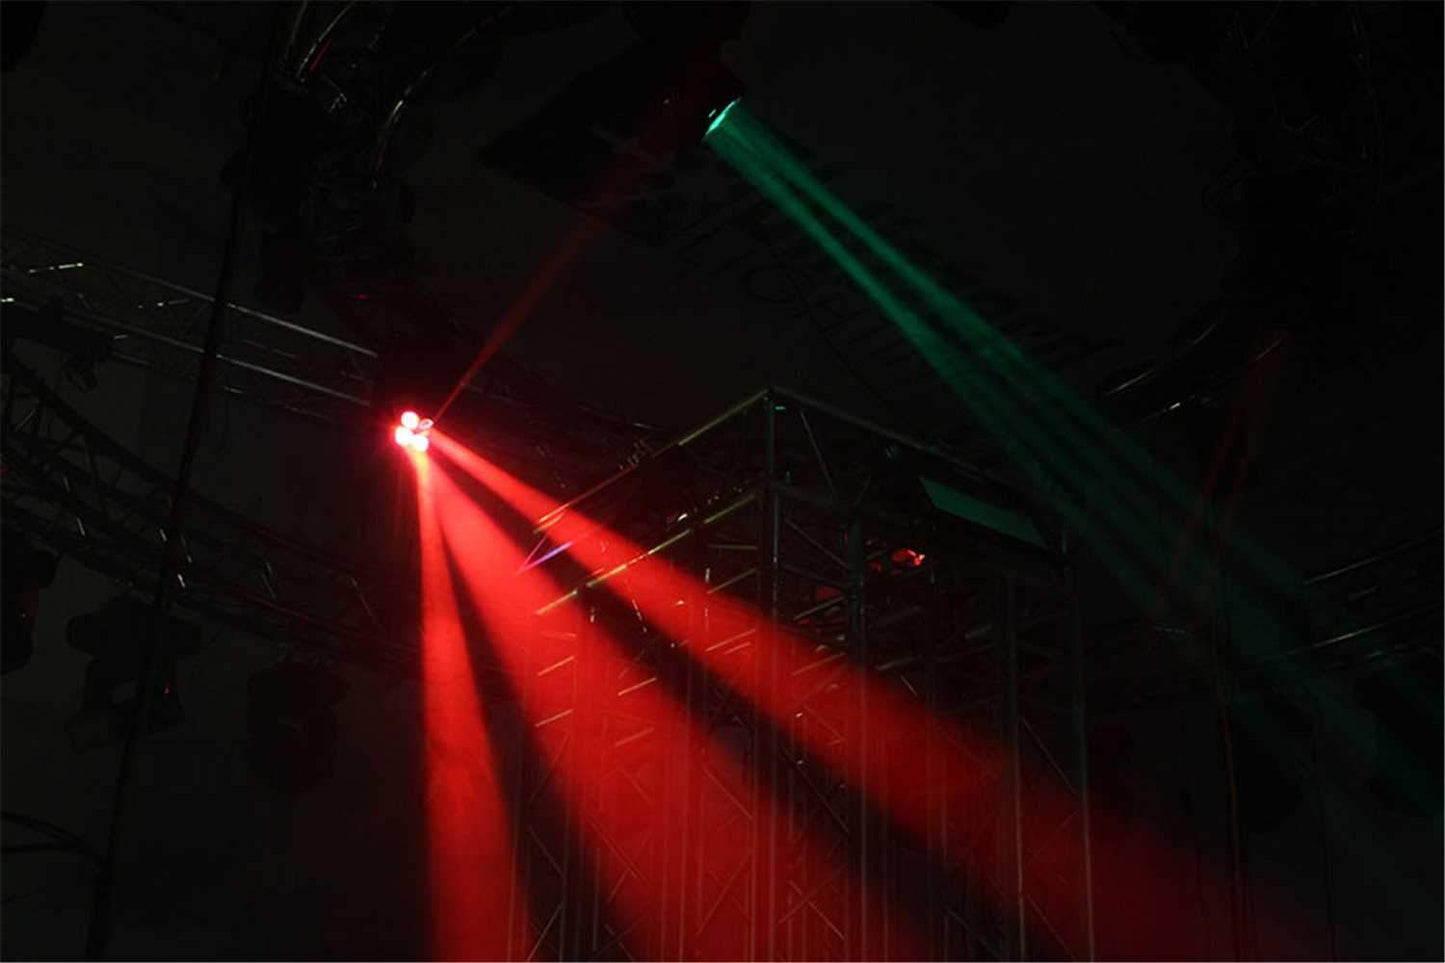 Blizzard Nova 4x25-Watt Moving Head LED Effect Light - ProSound and Stage Lighting